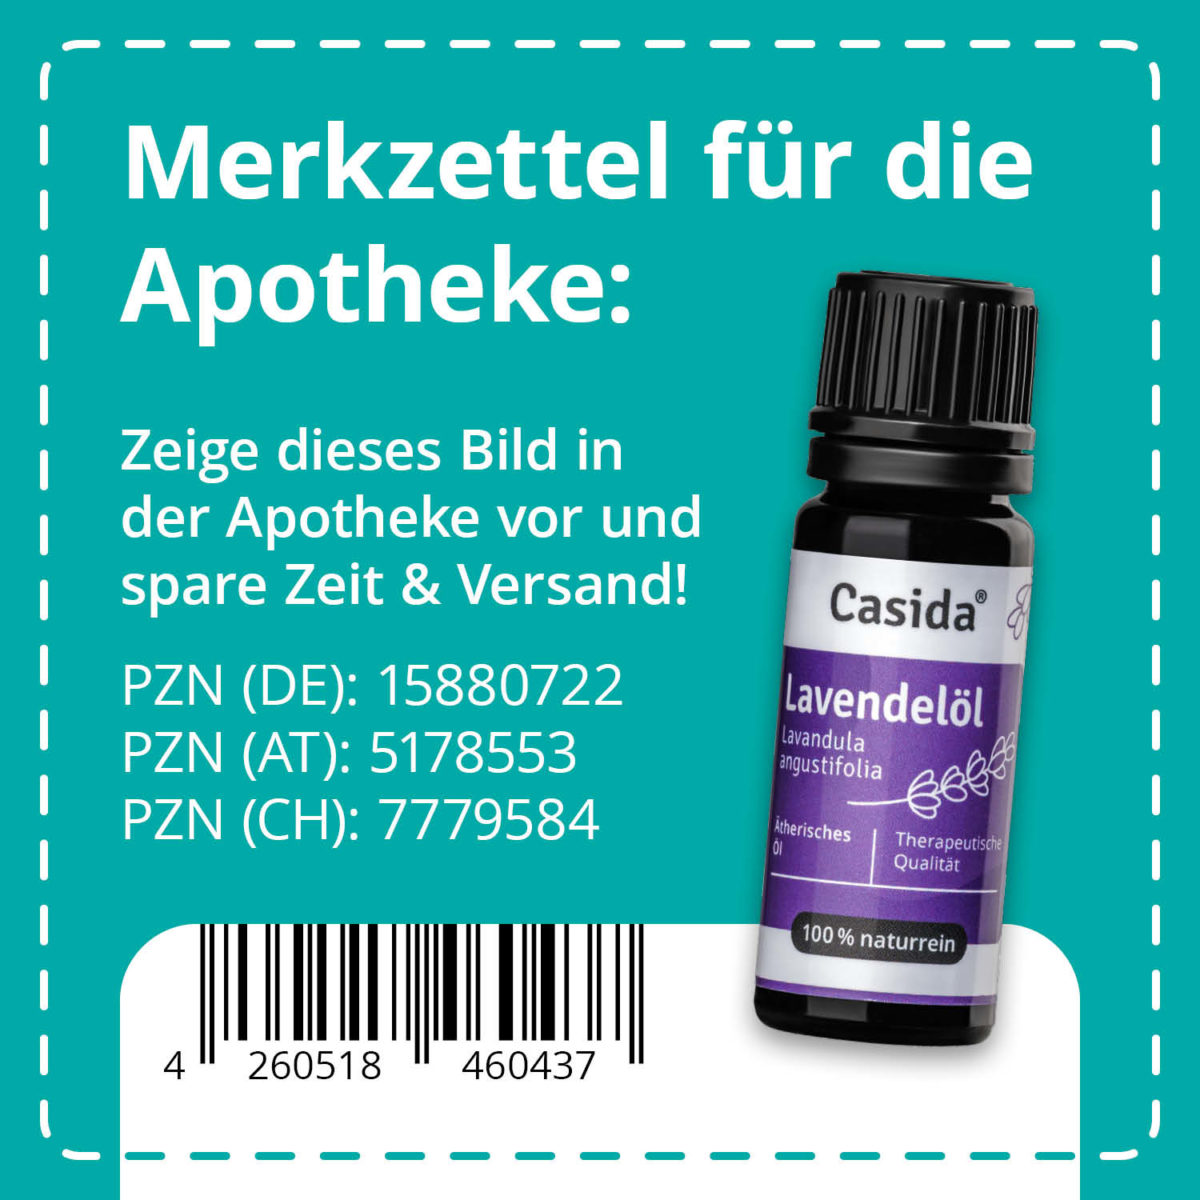 Casida Lavender Oil naturrein – 10 ml 15880722 PZN Apotheke Lavandula angustifolia Diffuser pur anwenden Schlaf Beruhigung10